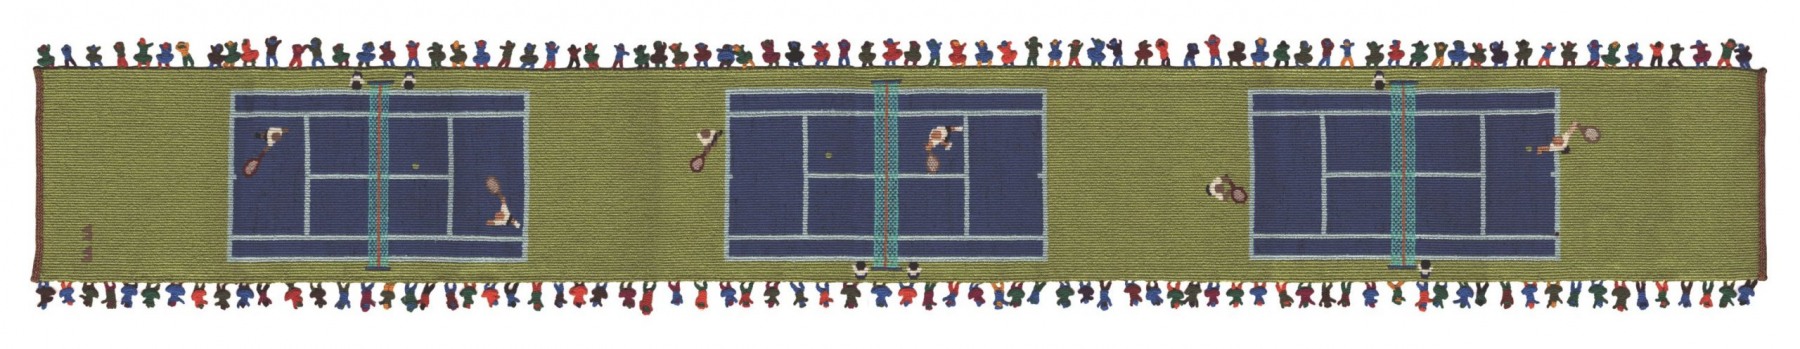 Sport Series - Tennis US Open